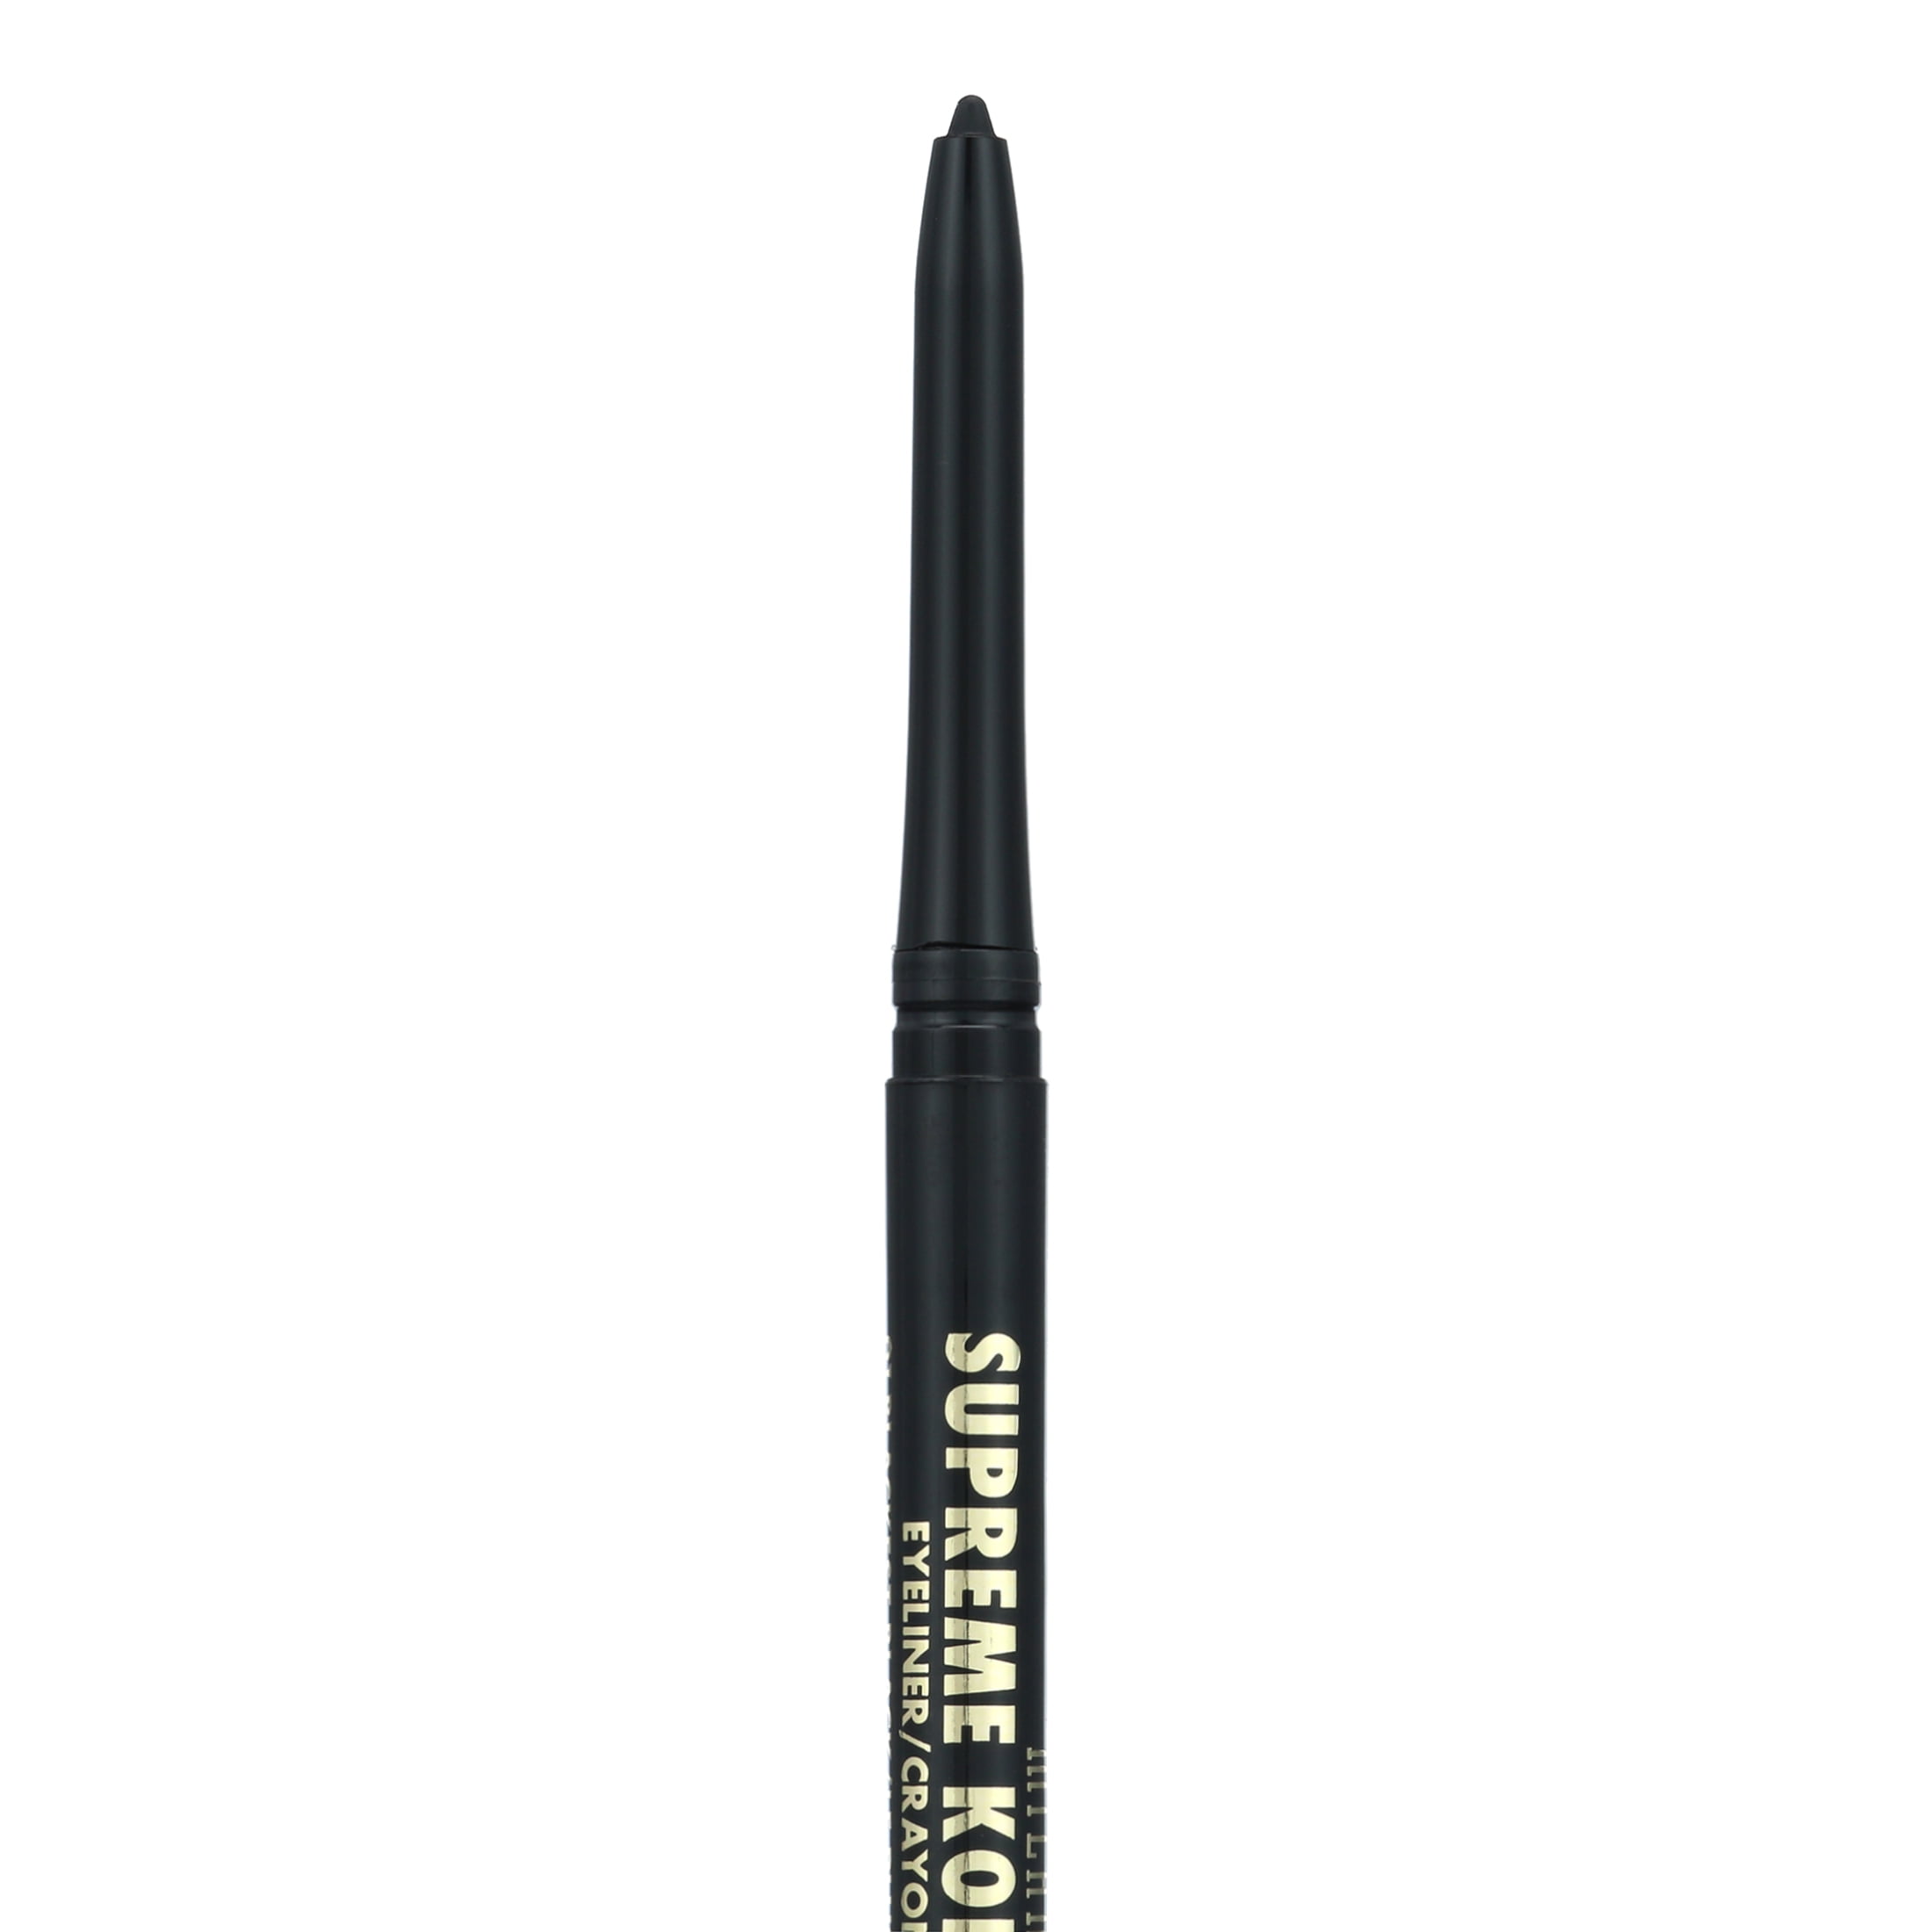 Creamy Kohl Longwear Eye Pencil - Very Vanta Extreme Black